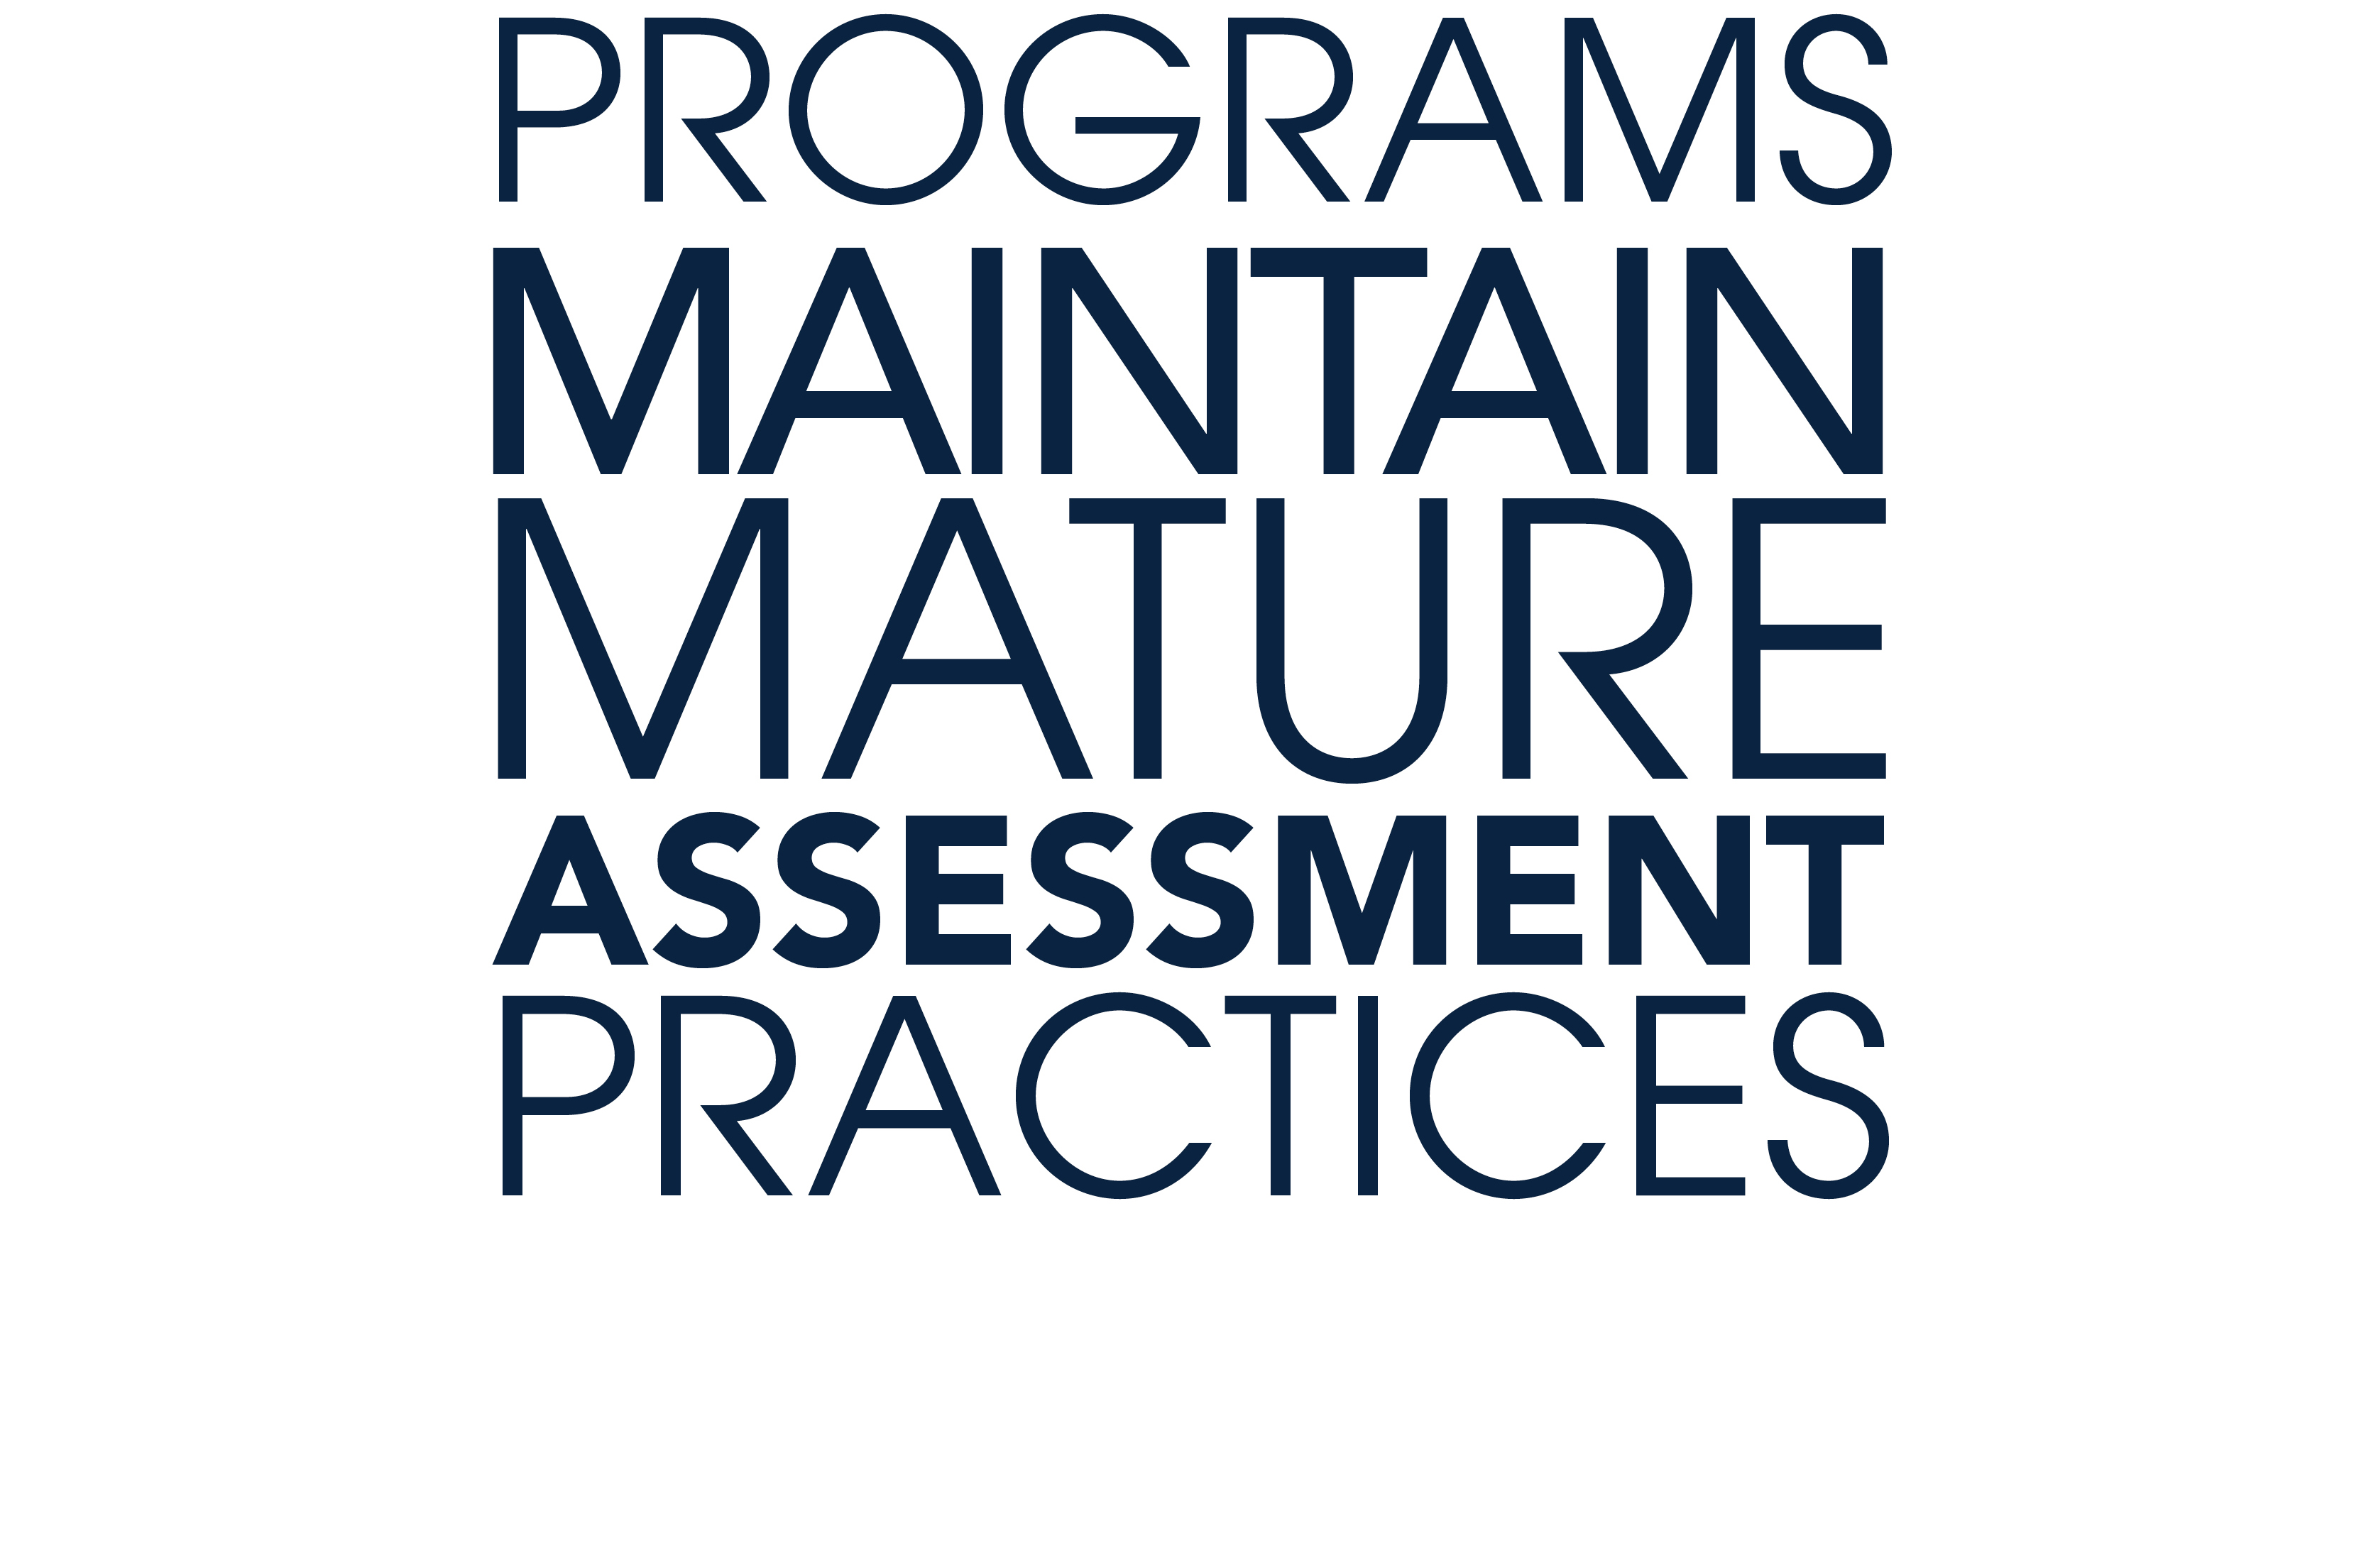 Programs maintain mature assessment practices